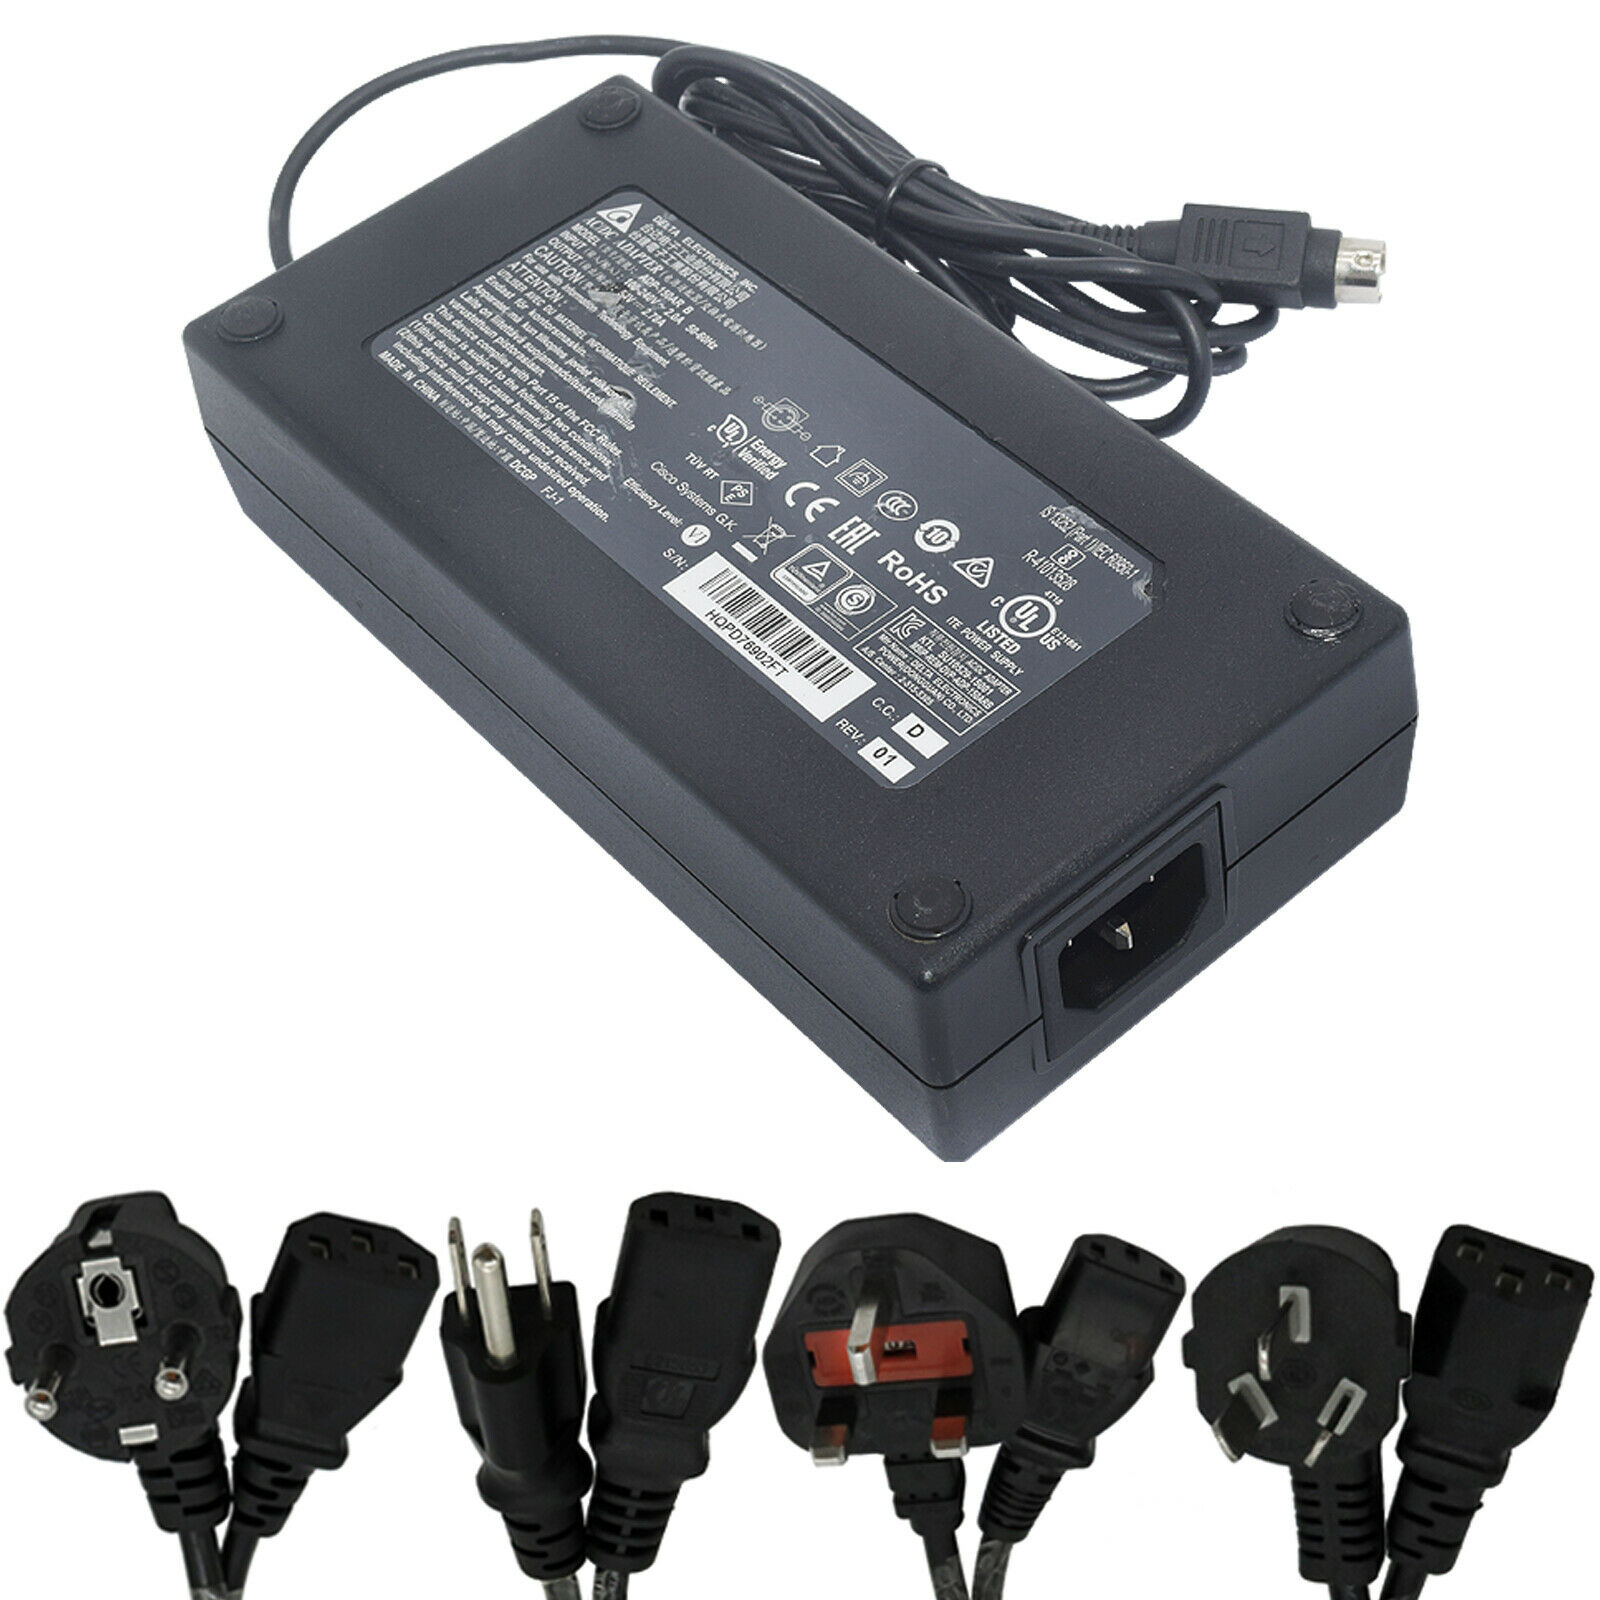 Genuine Delta For MSI Laptop Power Supply AC Adapter ADP-150AR B 150W 54V 4-PINS Model: ADP-150AR B Modified Item: N